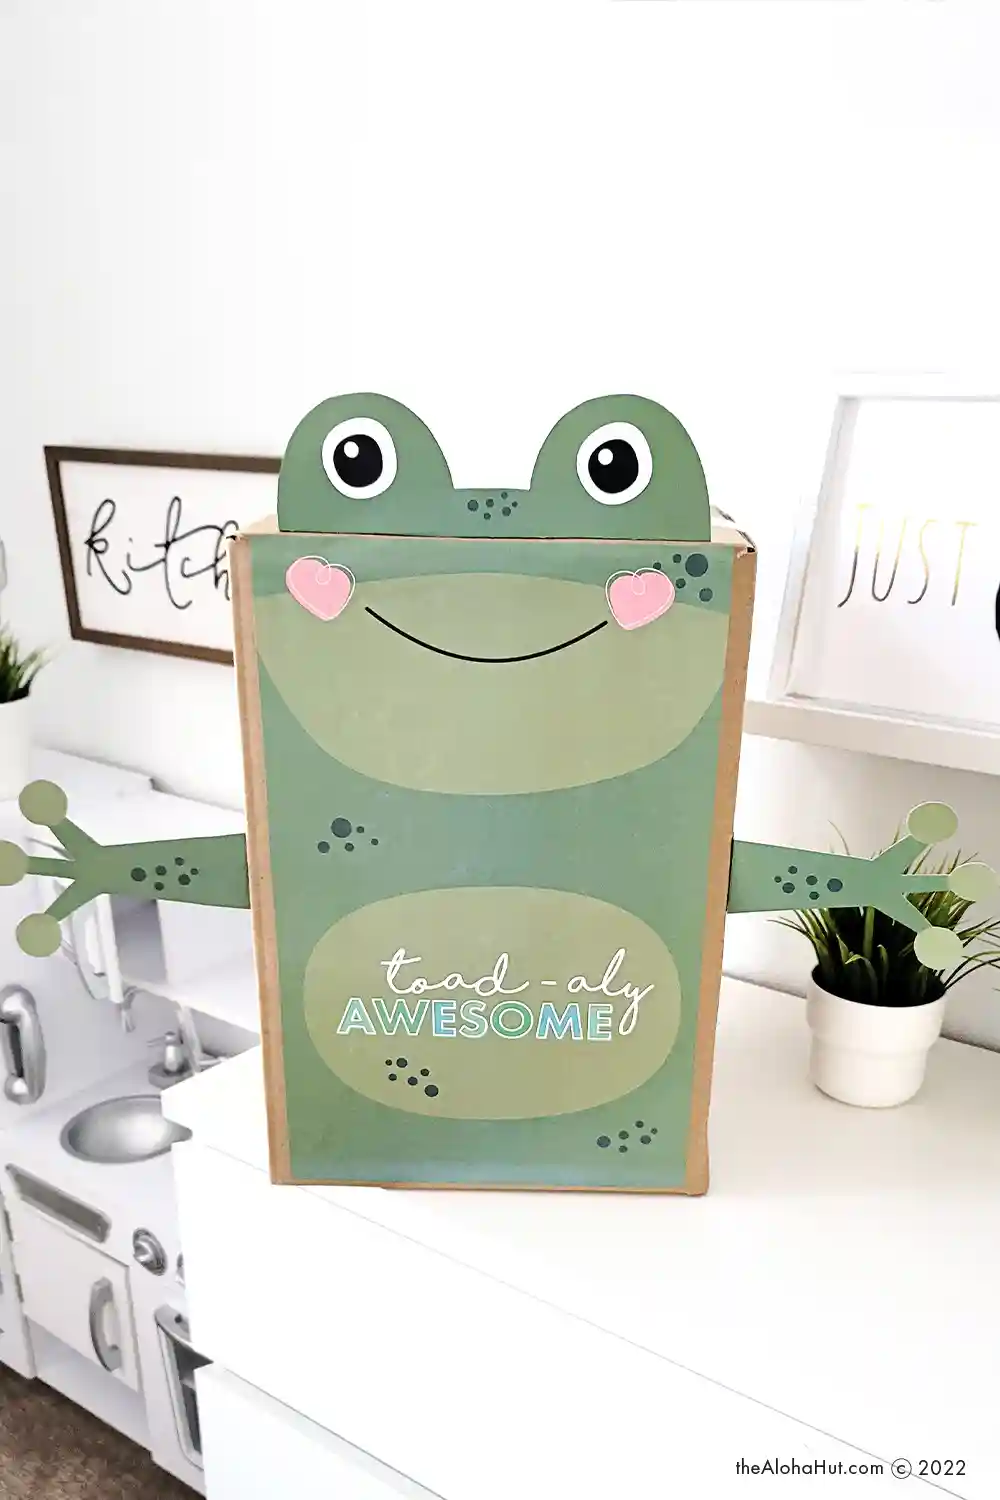 Easy Valentine's Day Box Ideas - free printable - Vending Machine, Frog, Bear